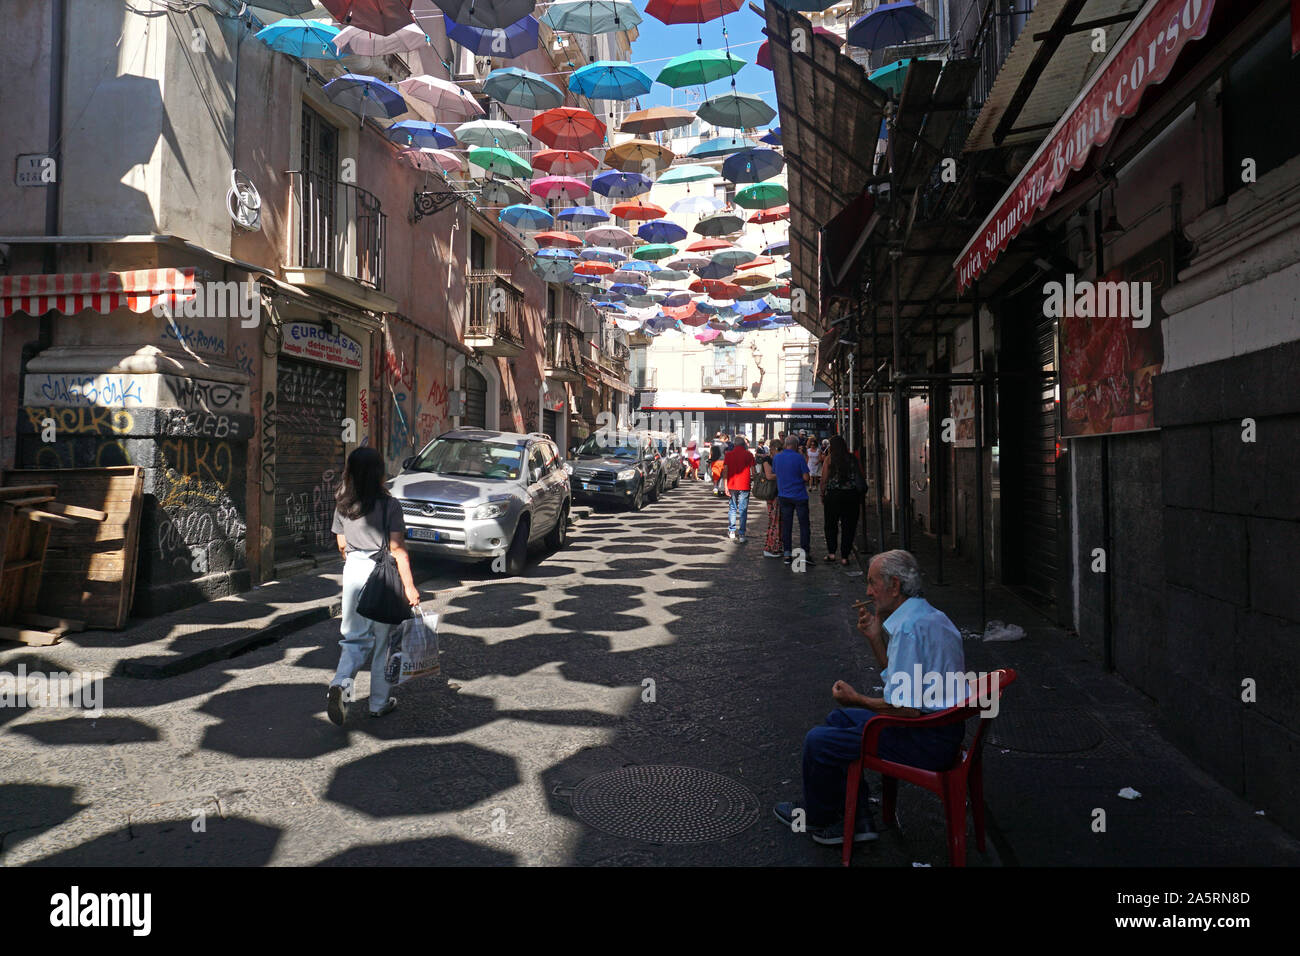 Die bunte Regenschirme der Regenschirm Sky Projekt in der Via Cisira und Via Pardo, Catania, Sicly, Italien, Stockfoto